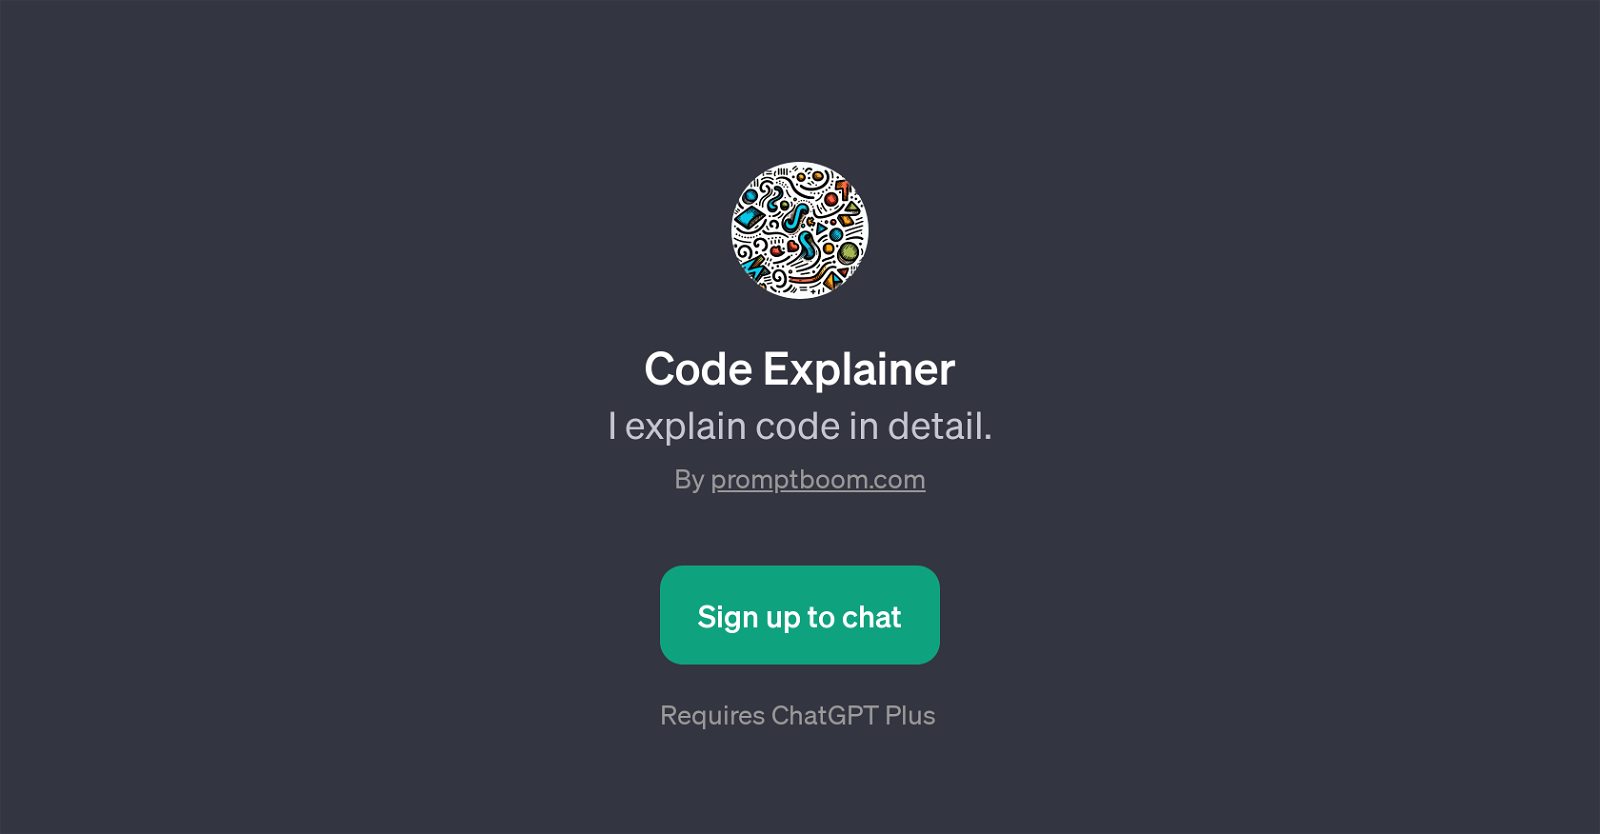 Code Explainer website